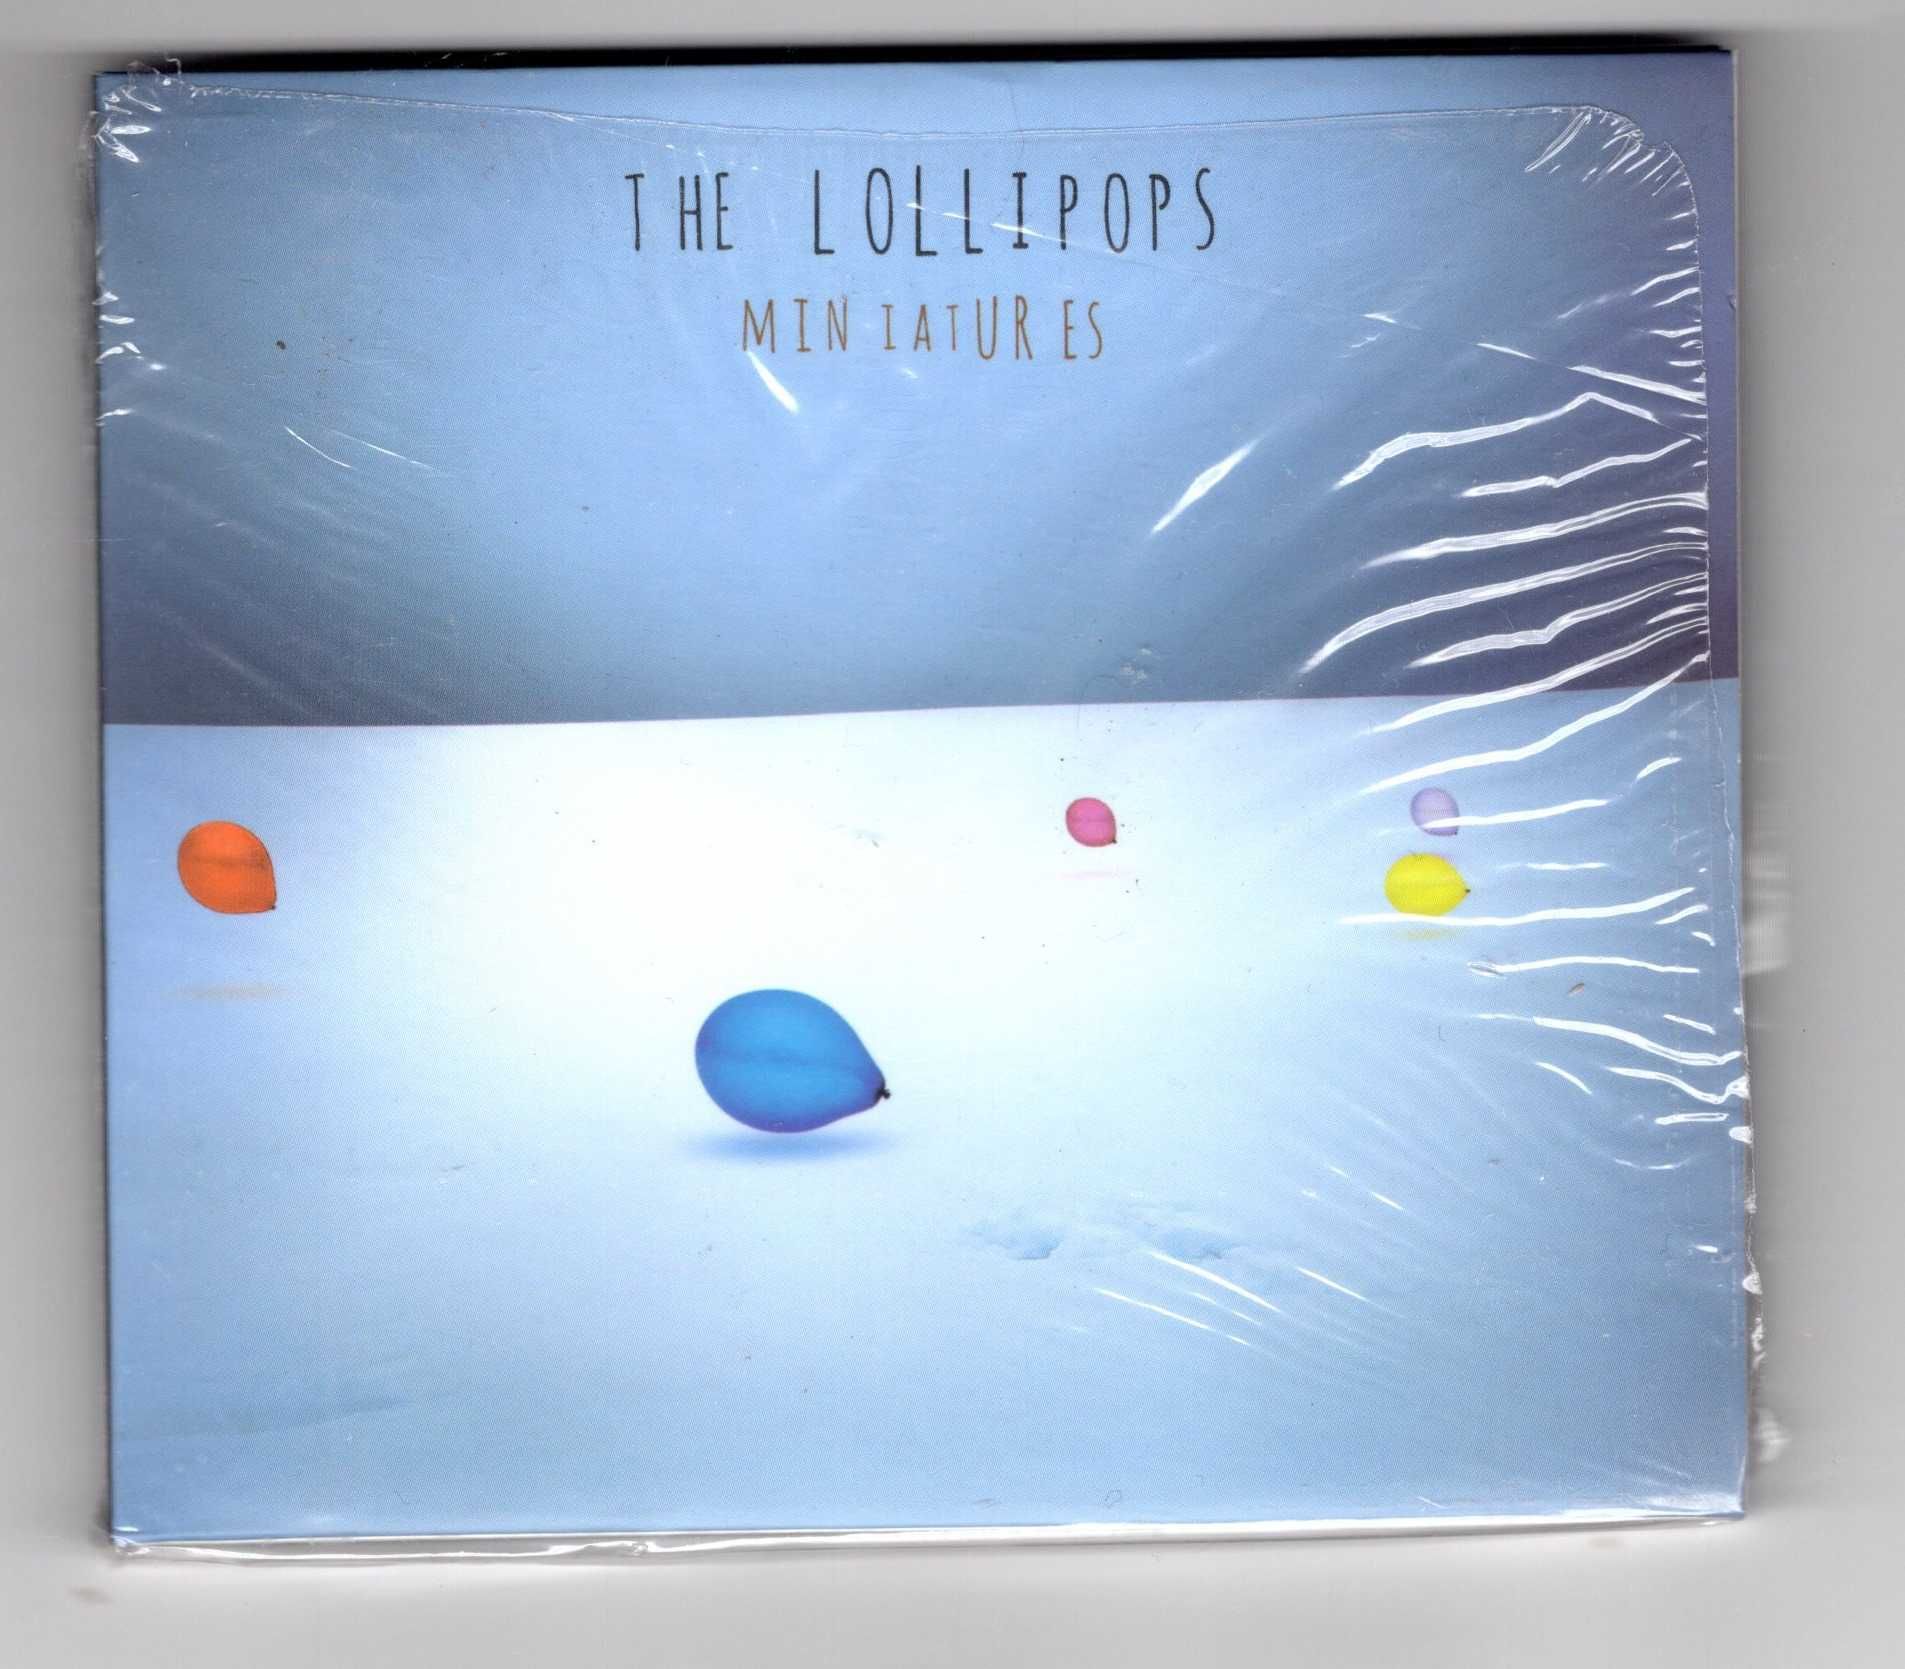 The Lollipops - Miniatures (CD)